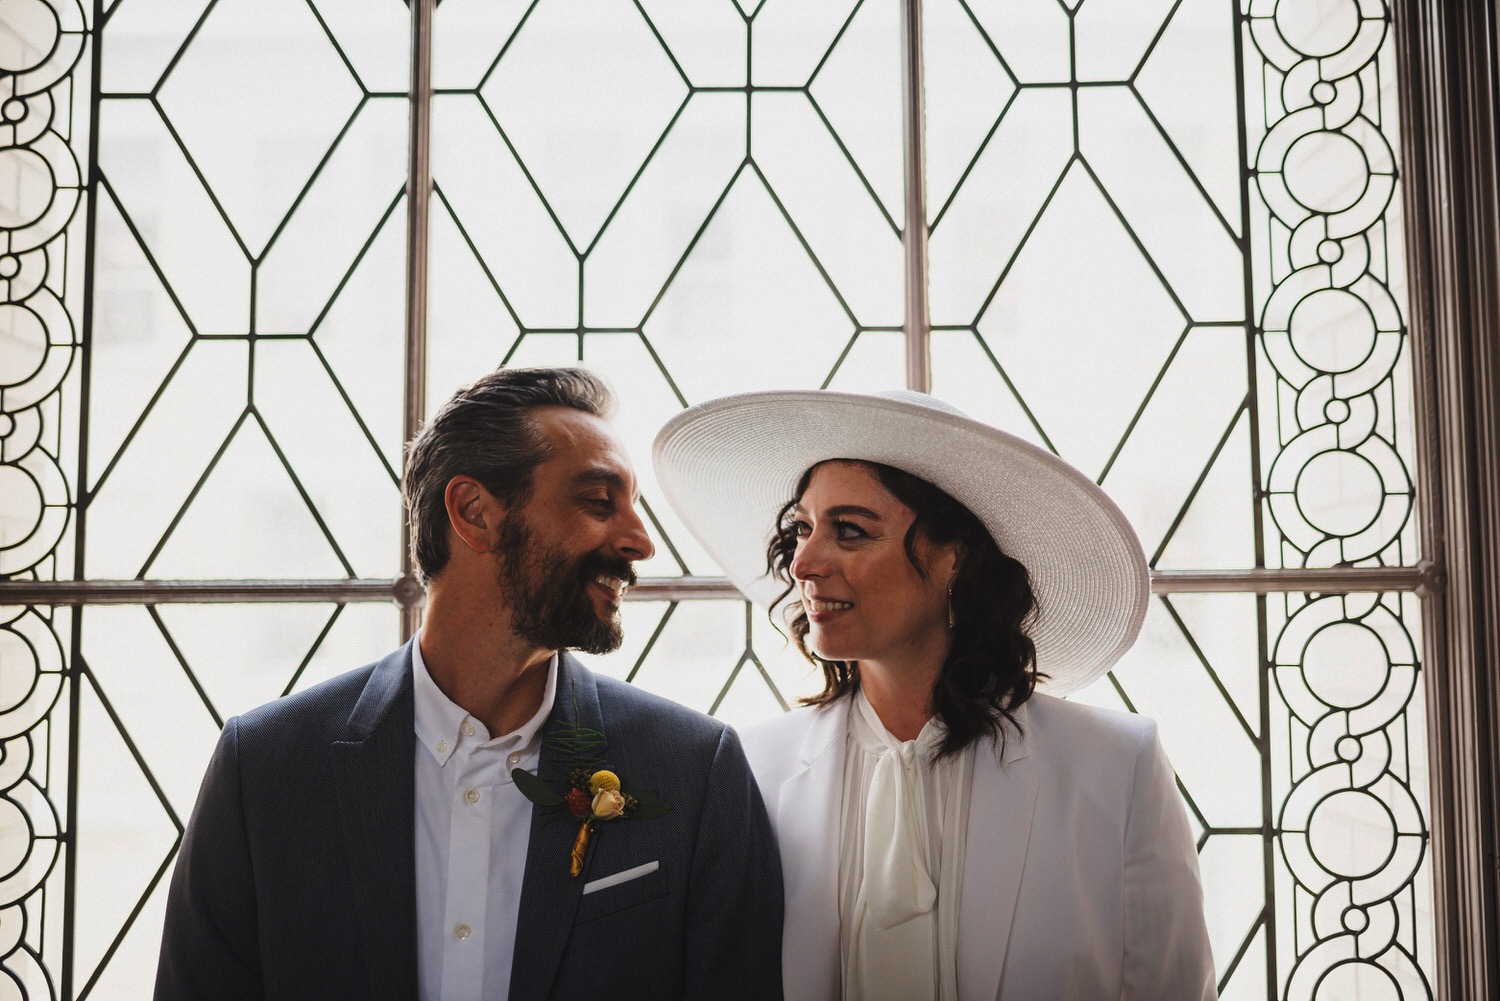 Wedding Bride Wearing Hat